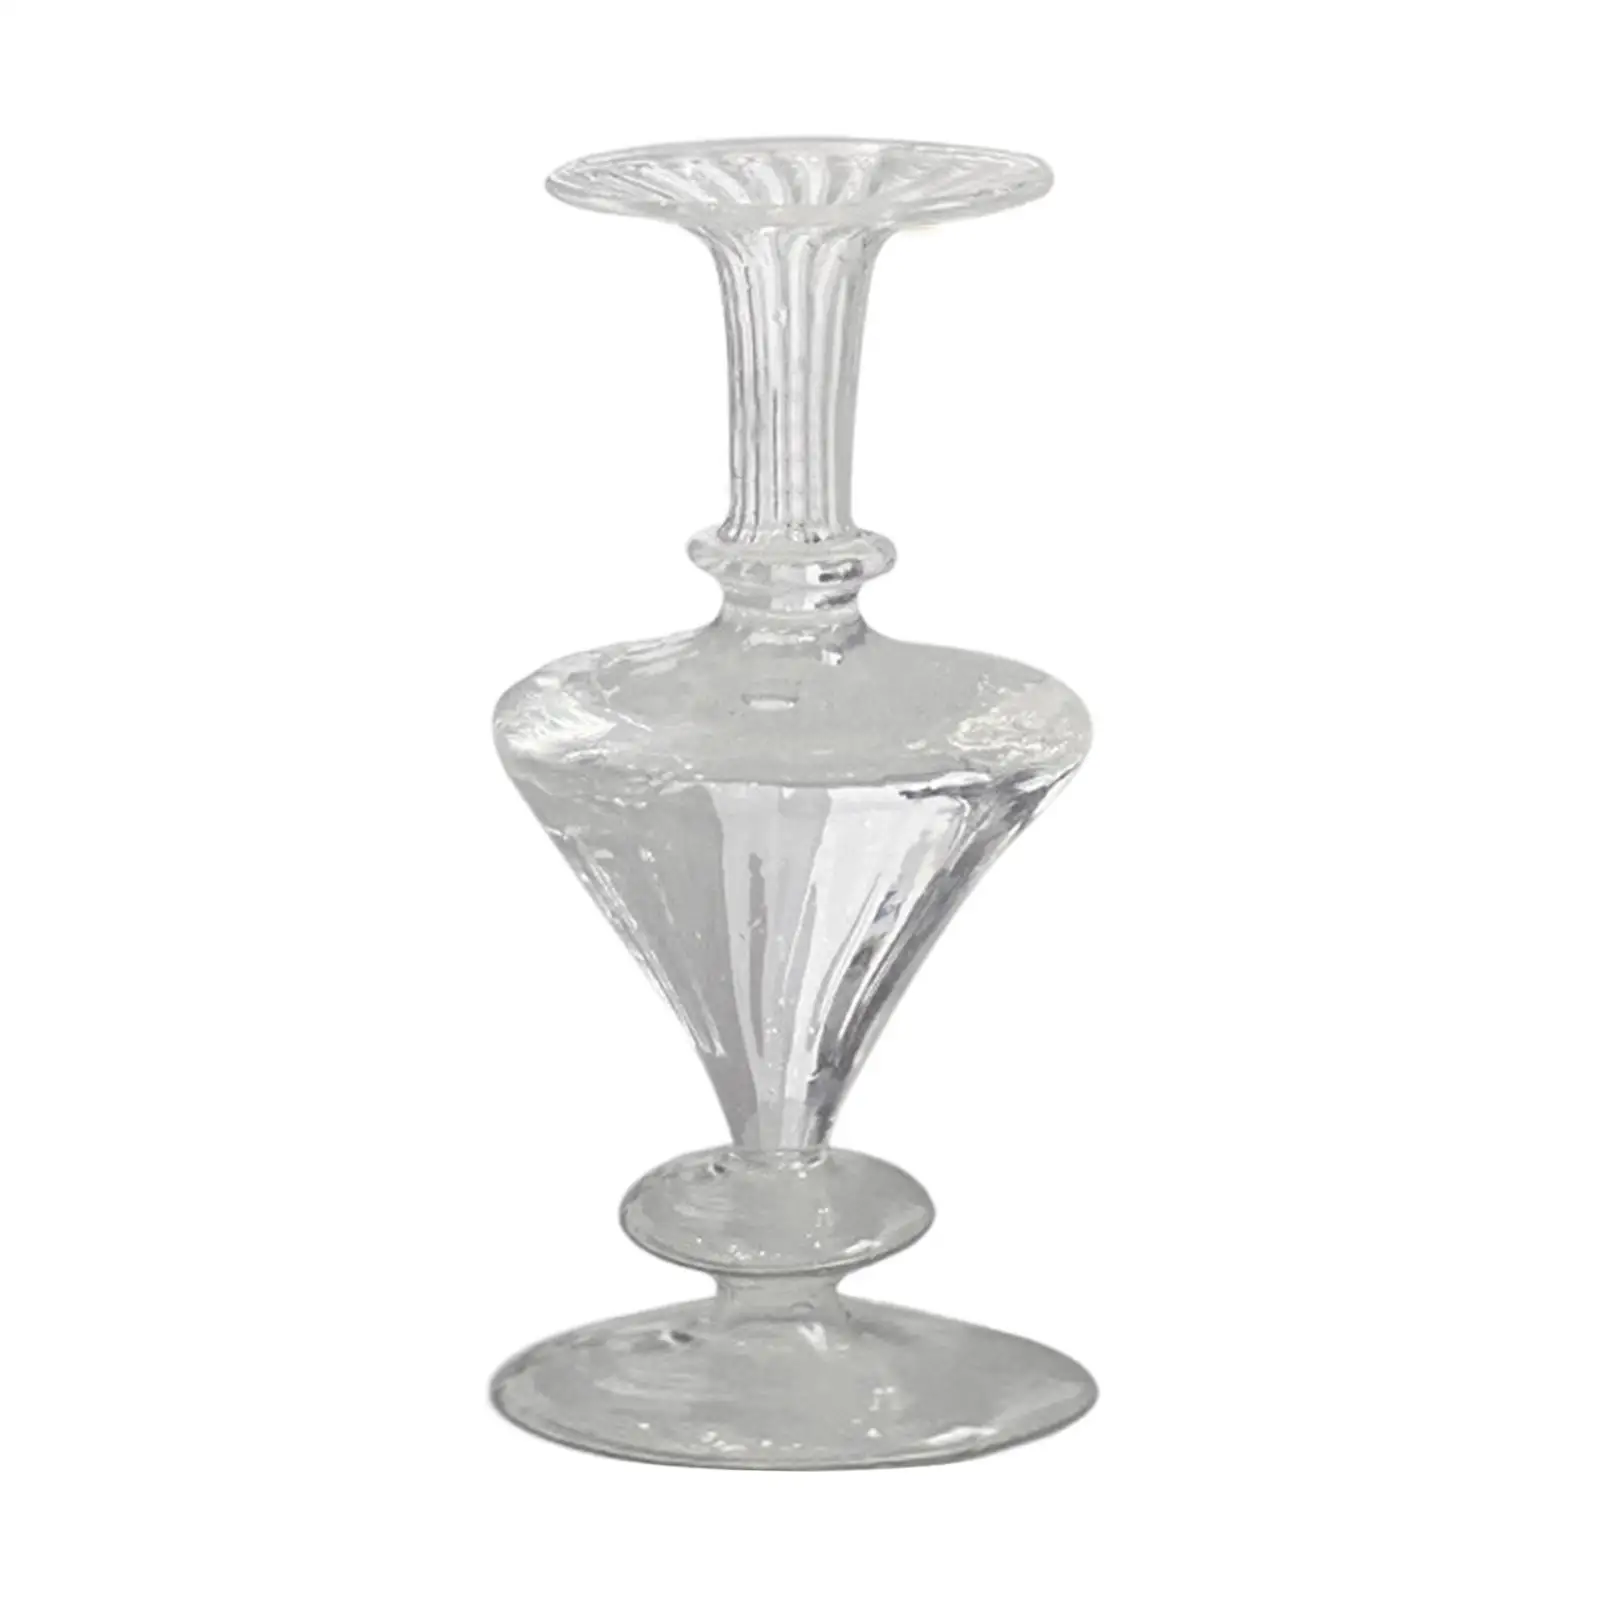 Glass Vase Modern Simple Desktop Ornament Flower Arrangement Flowerpot for Party Shelf Living Room Dining Table Home Decor